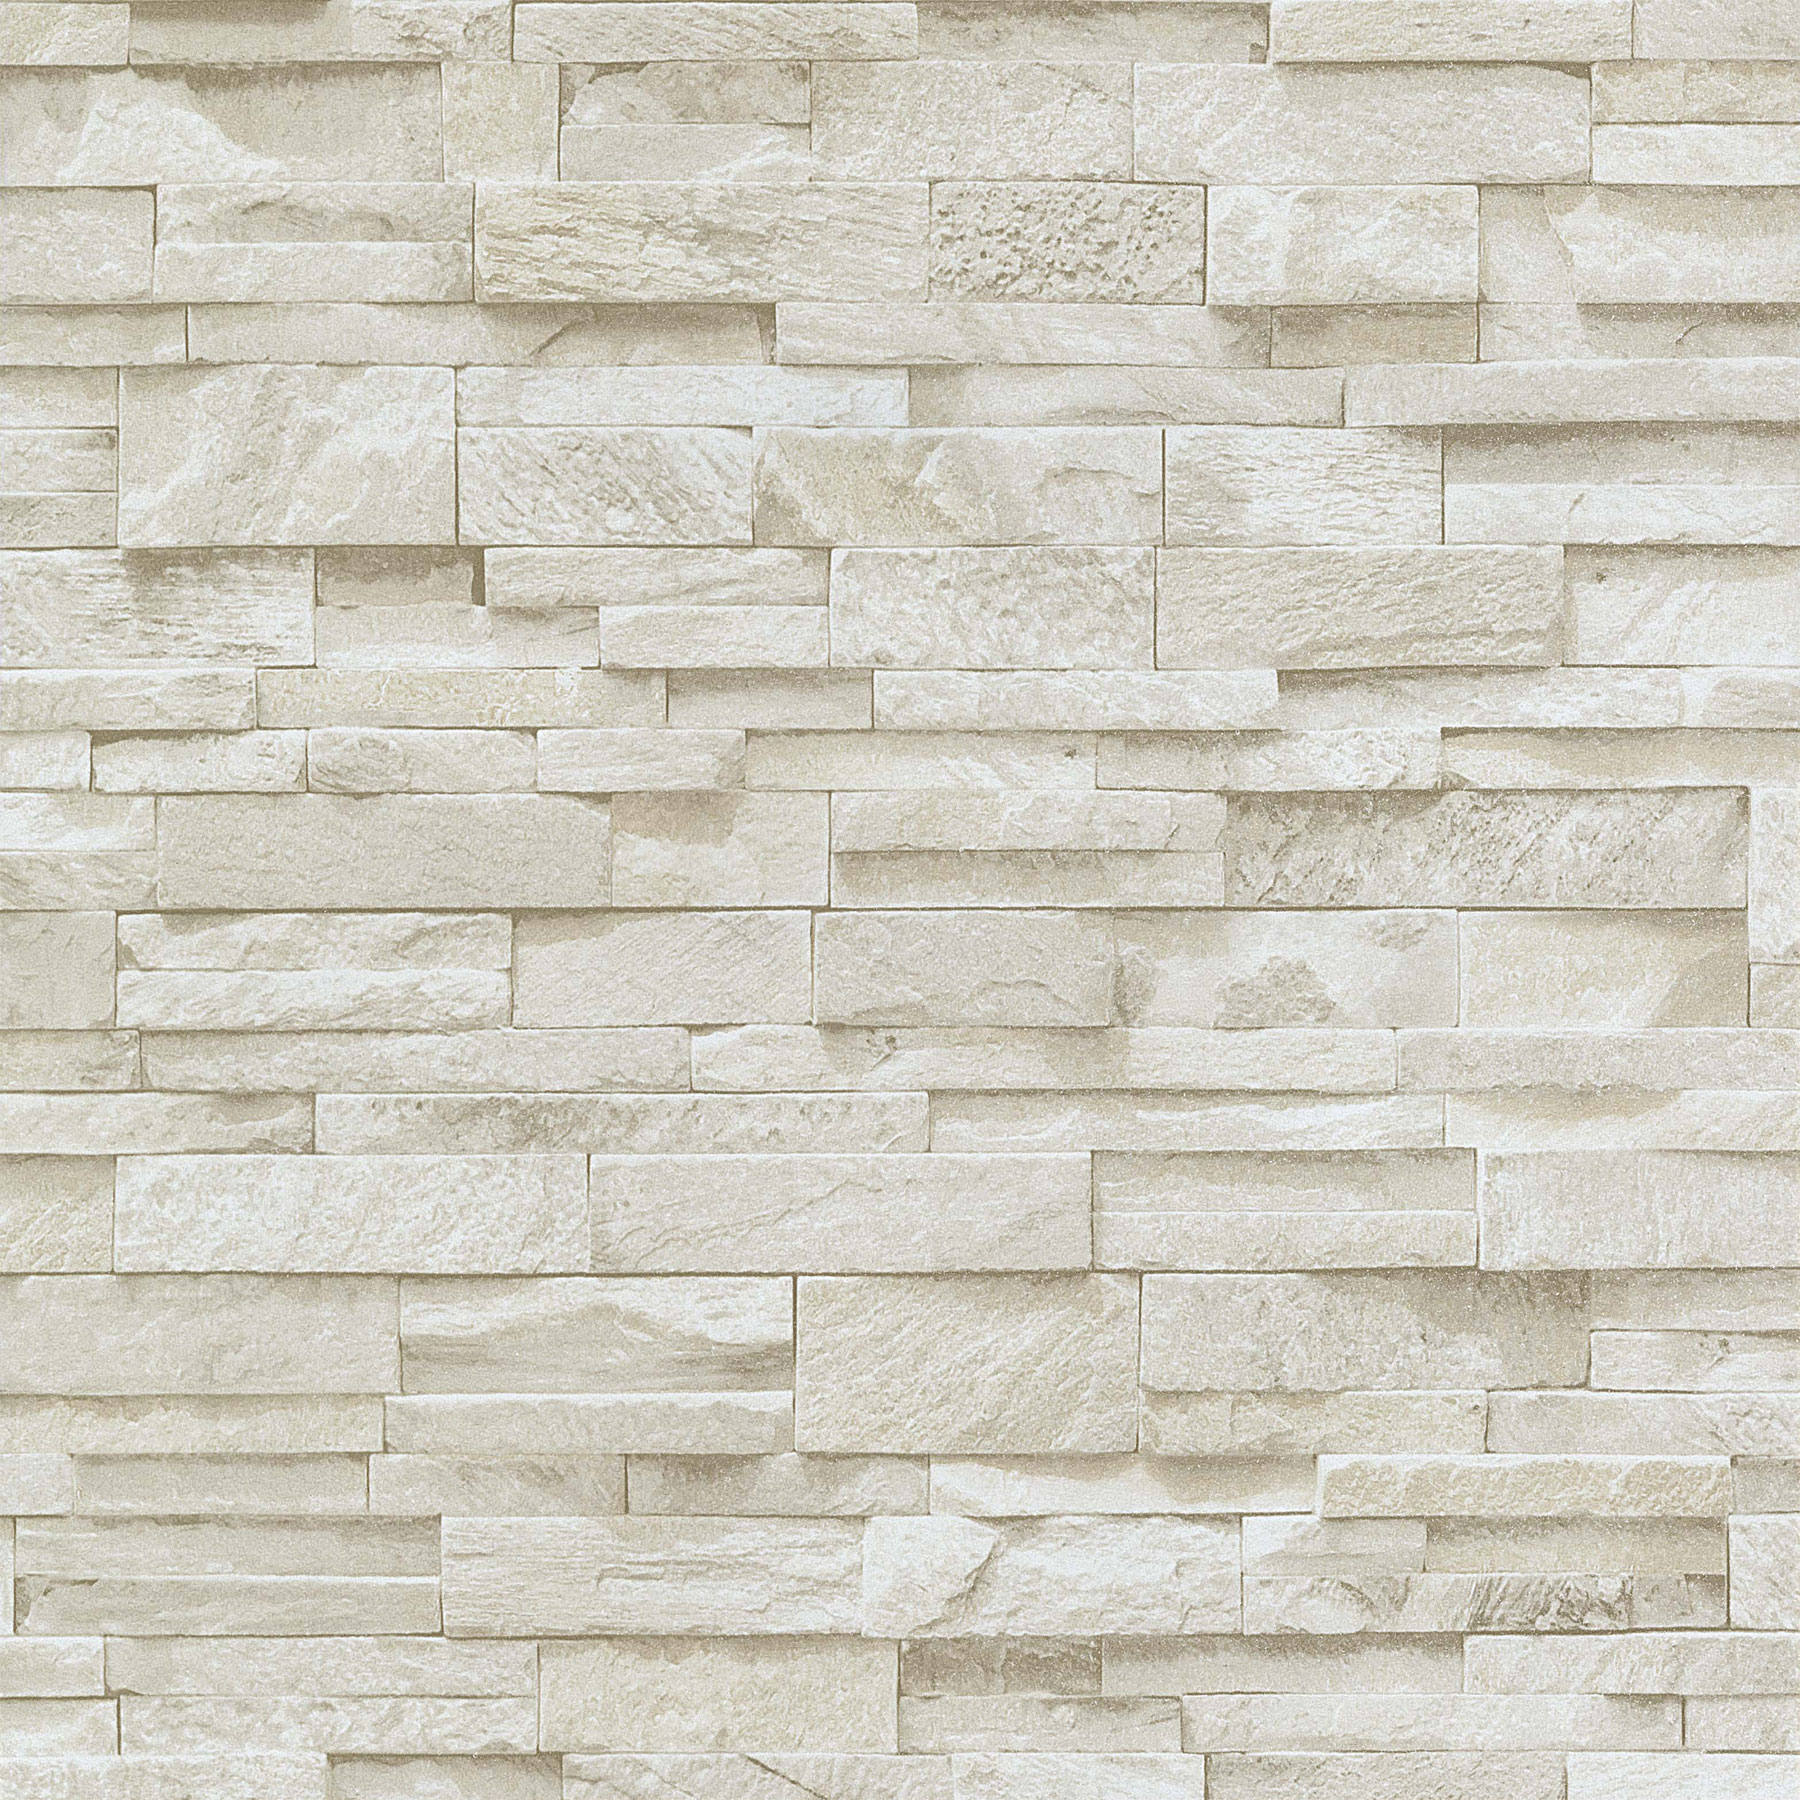 wood panel effect wallpaper,wall,stone wall,brickwork,brick,beige